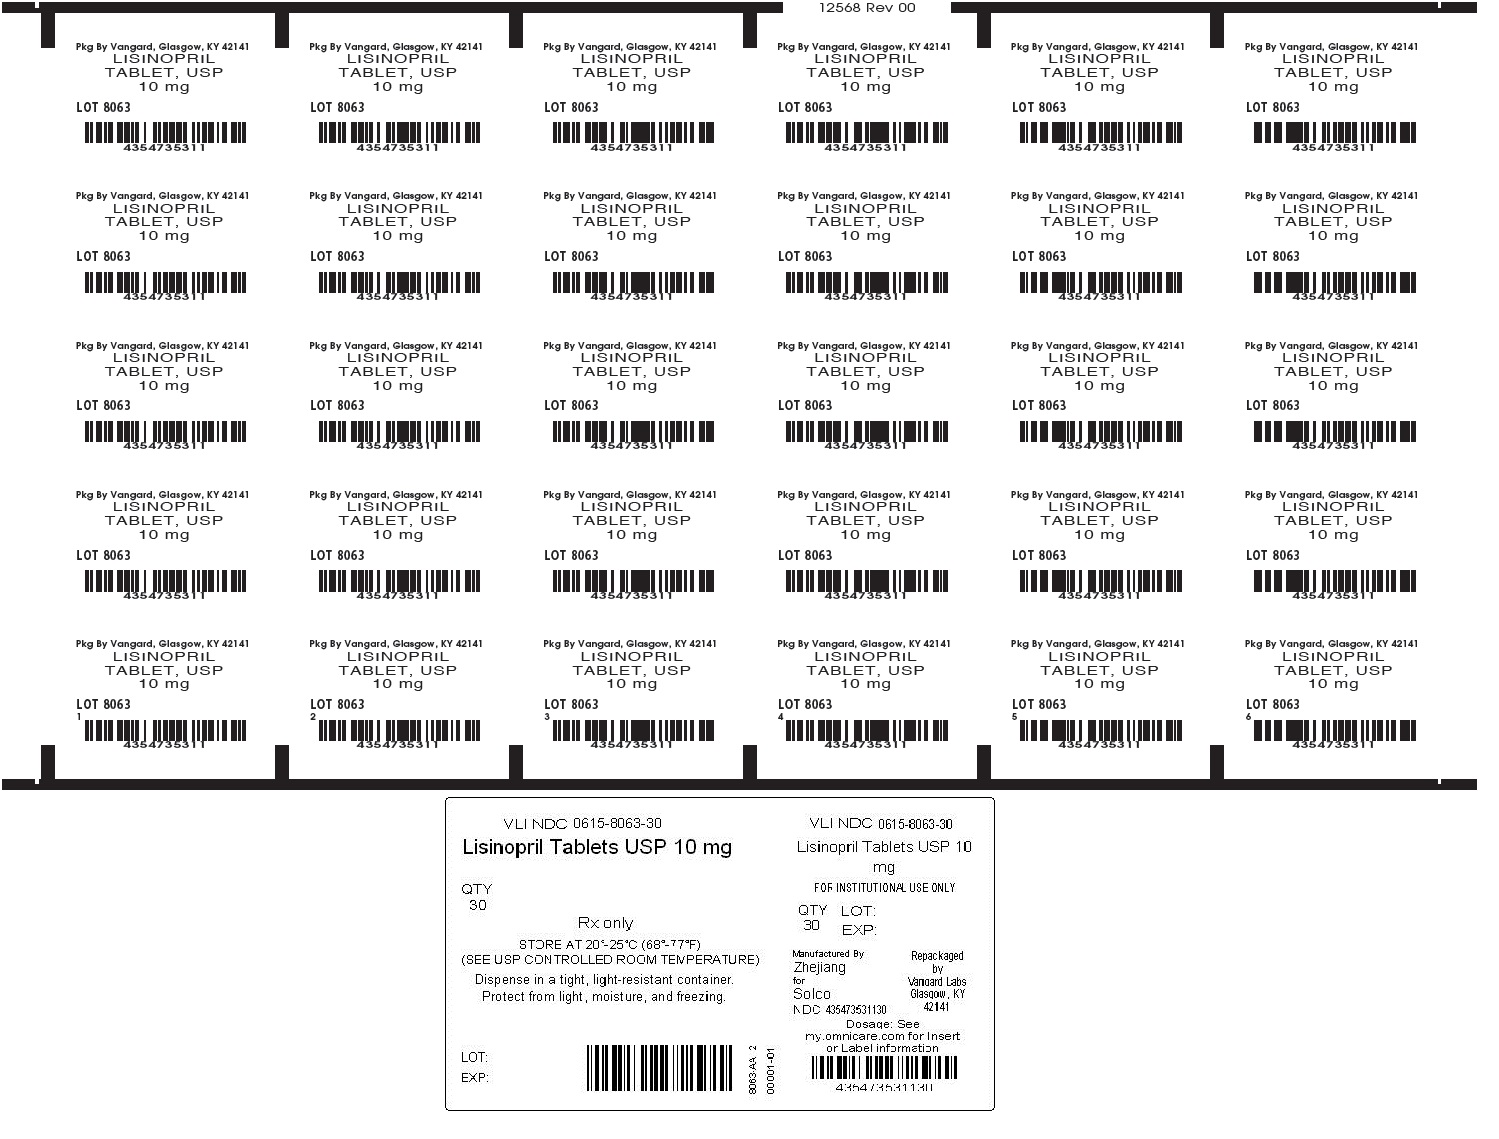 Lisinopril 10mg Tablet unit dose label